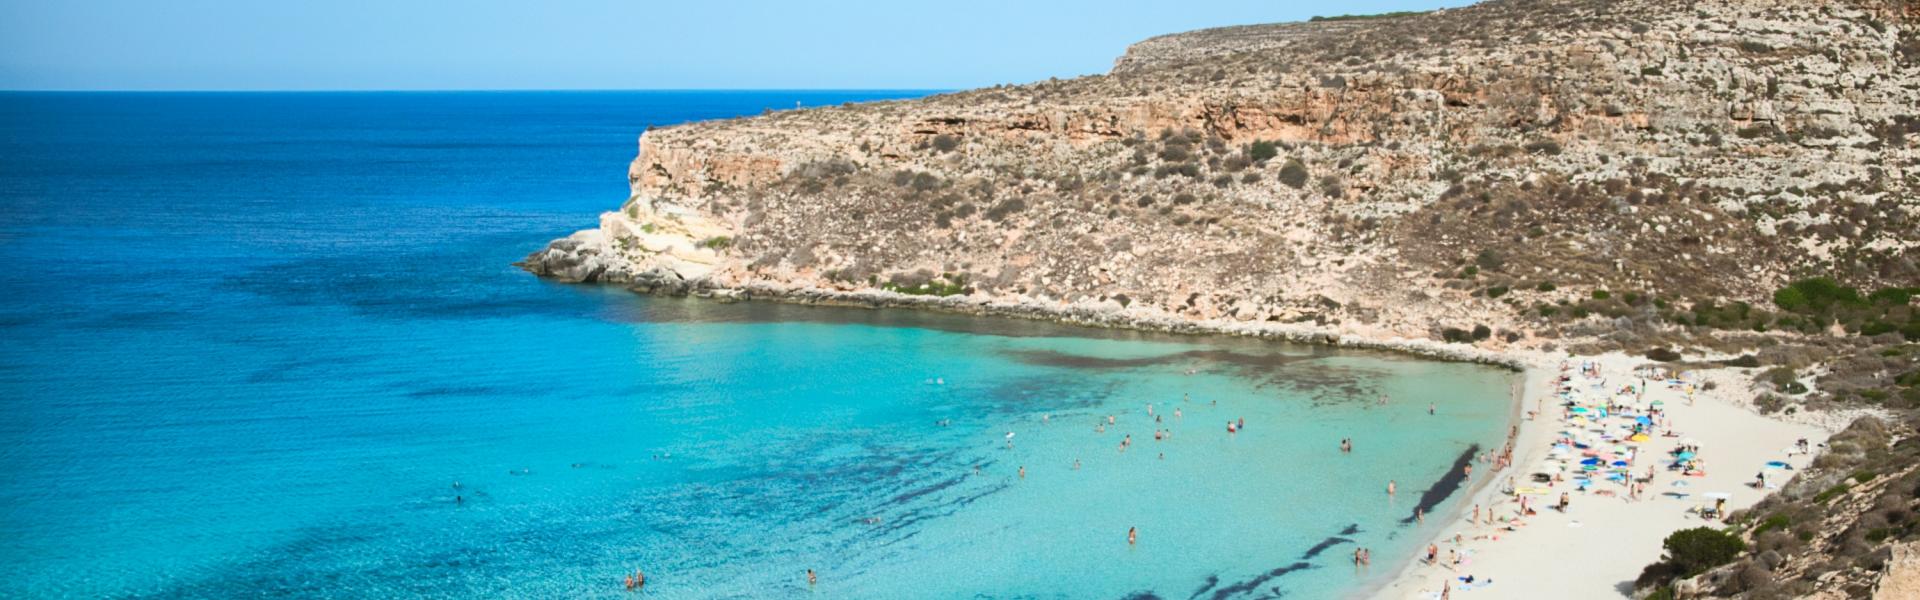 Lampedusa e Linosa nature view